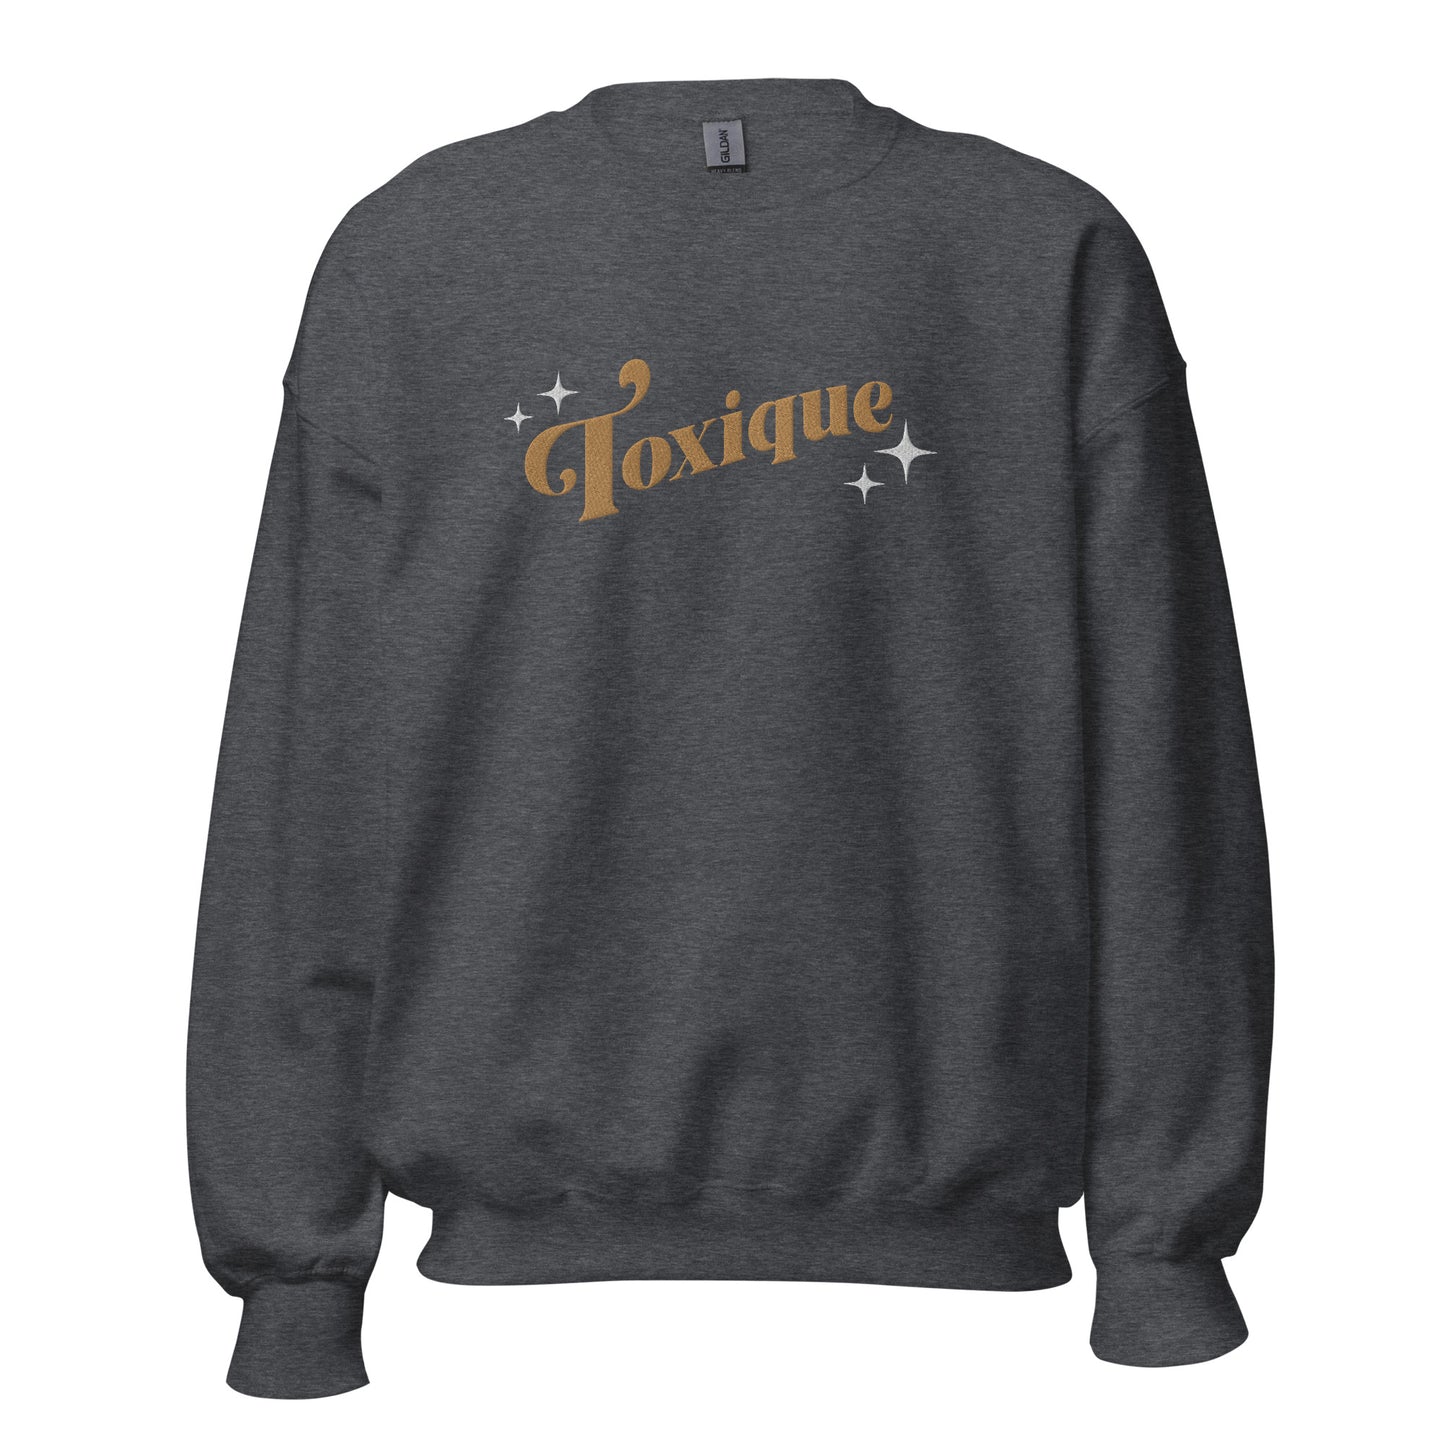 Toxique embroidered crewneck sweatshirt